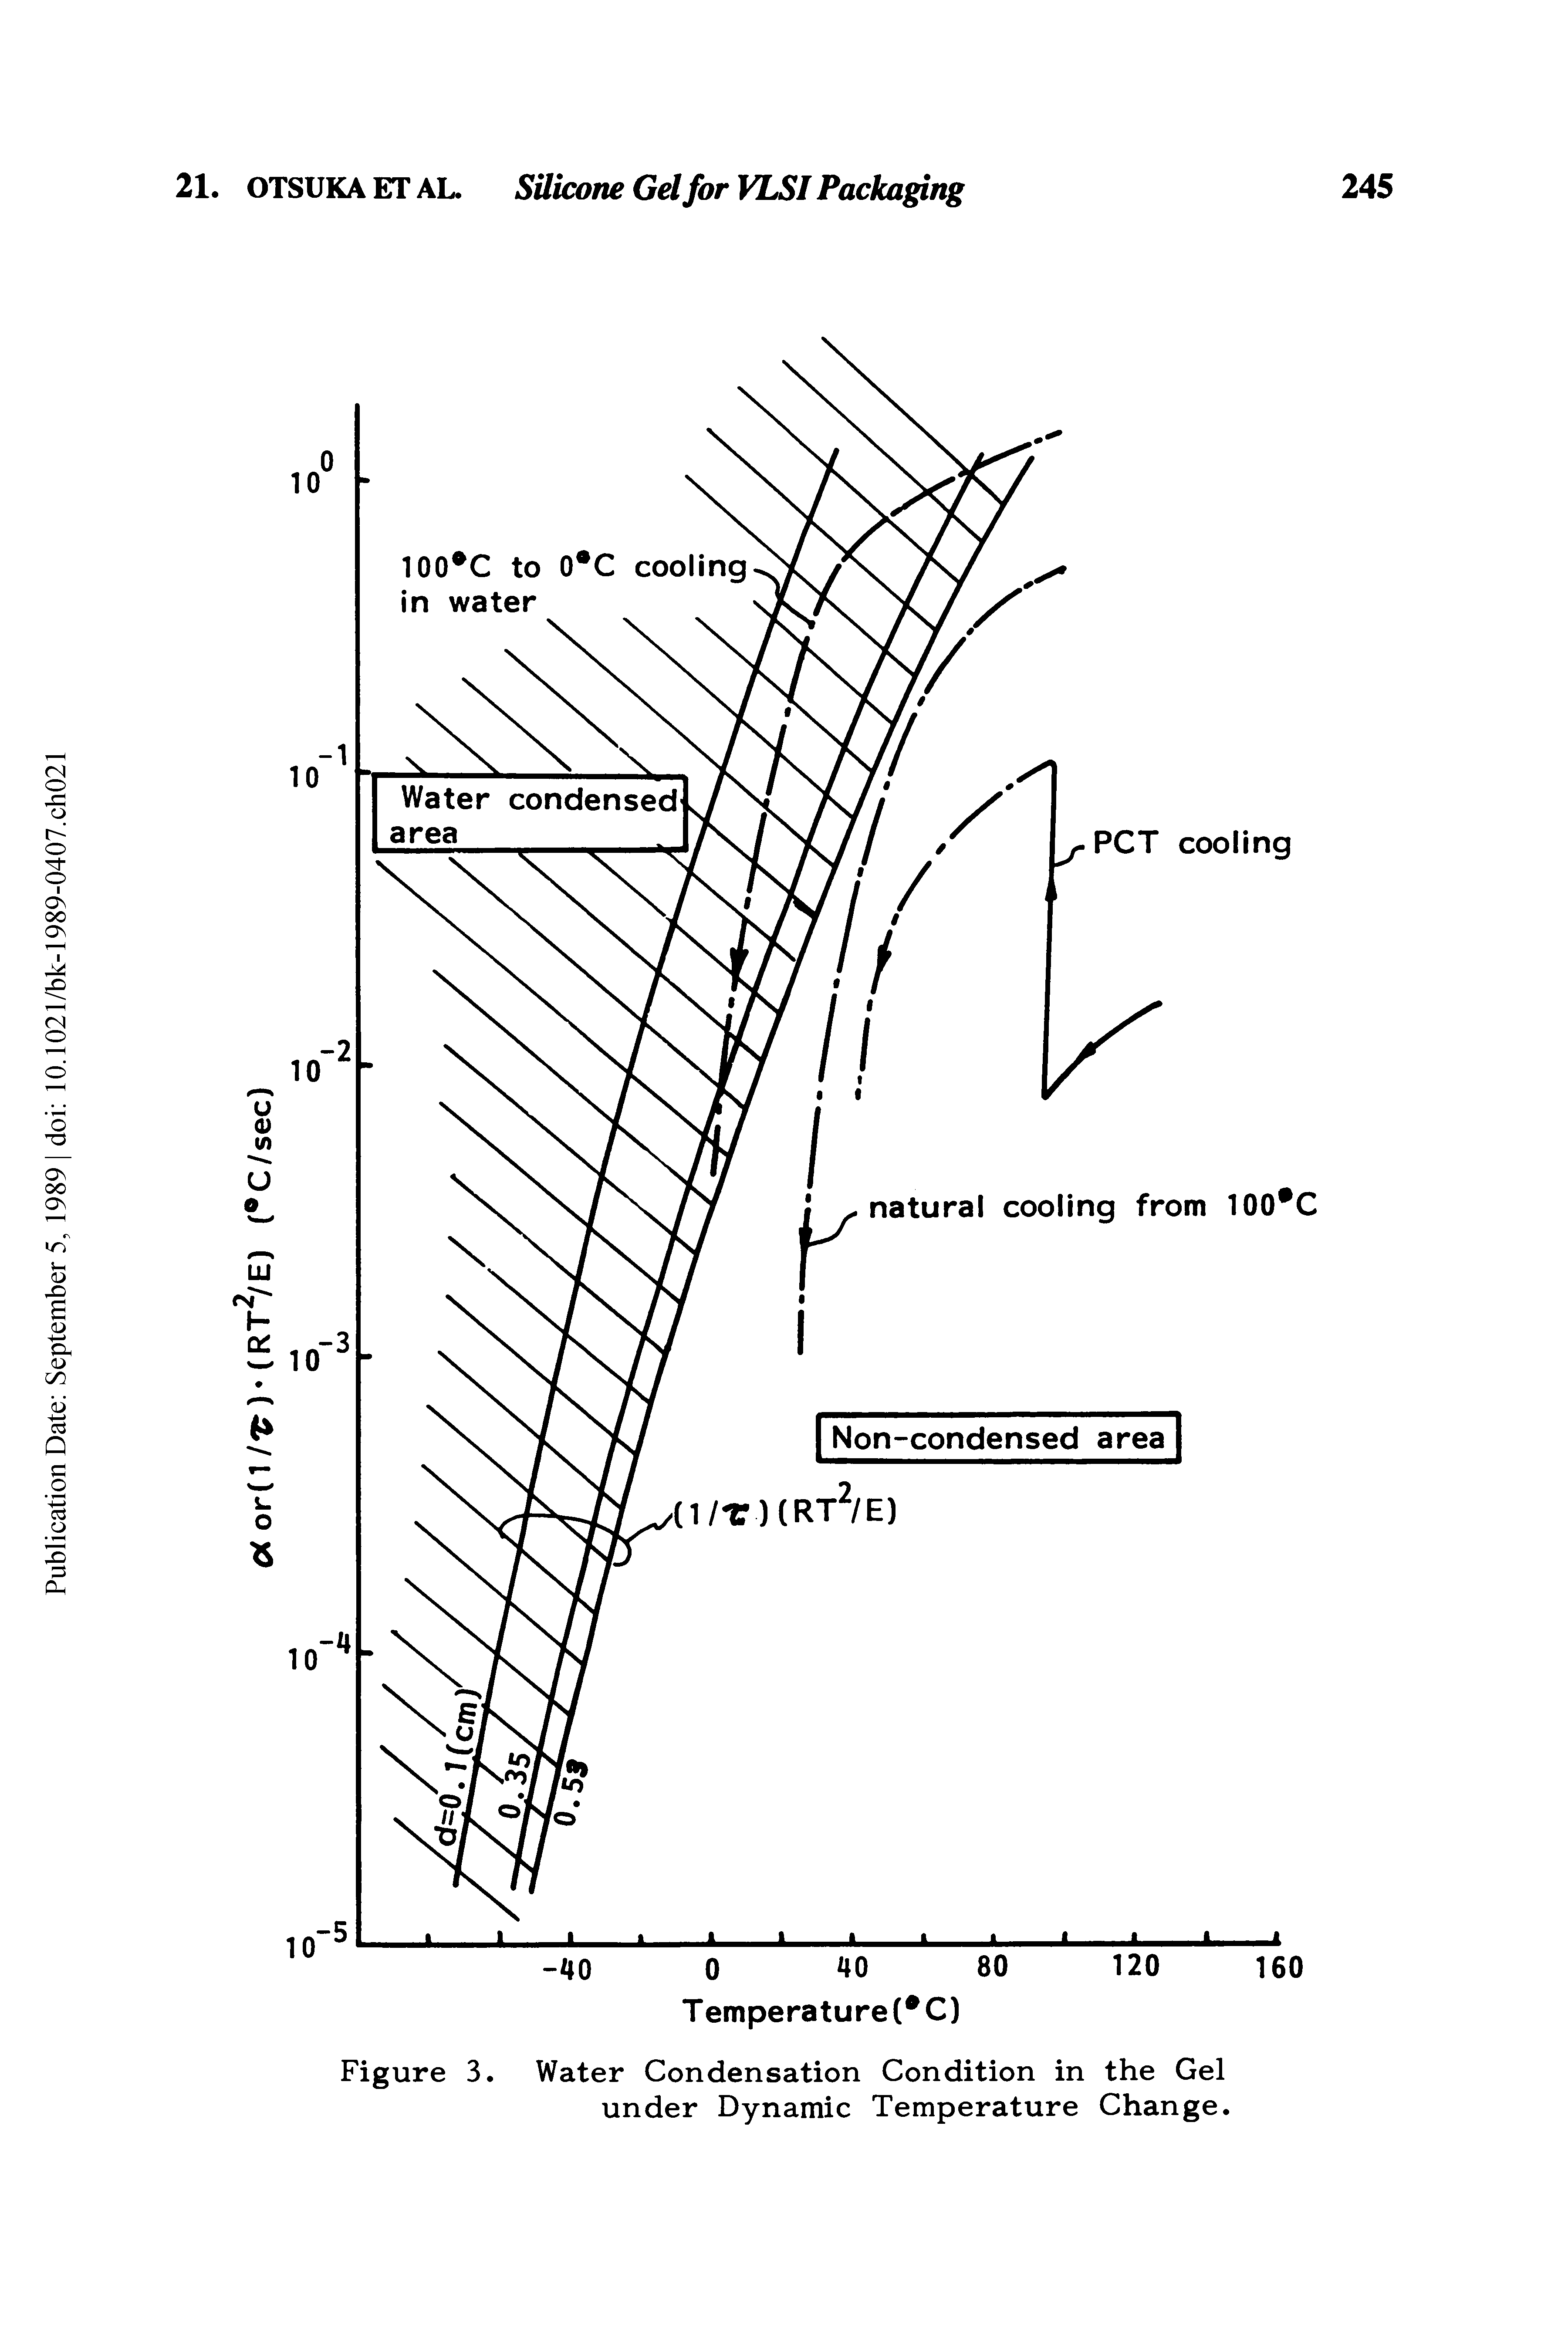 Figure 3. Water Condensation Condition in the Gel under Dynamic Temperature Change.